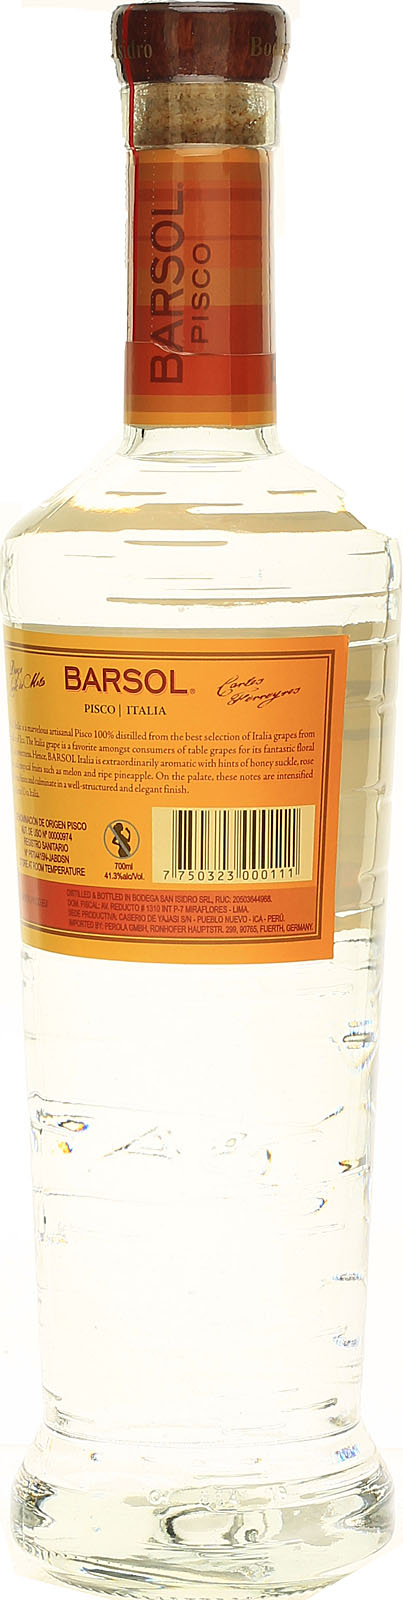 Liter Barsol Vol. Shop Italia % 0,7 Pisco 41,3 im